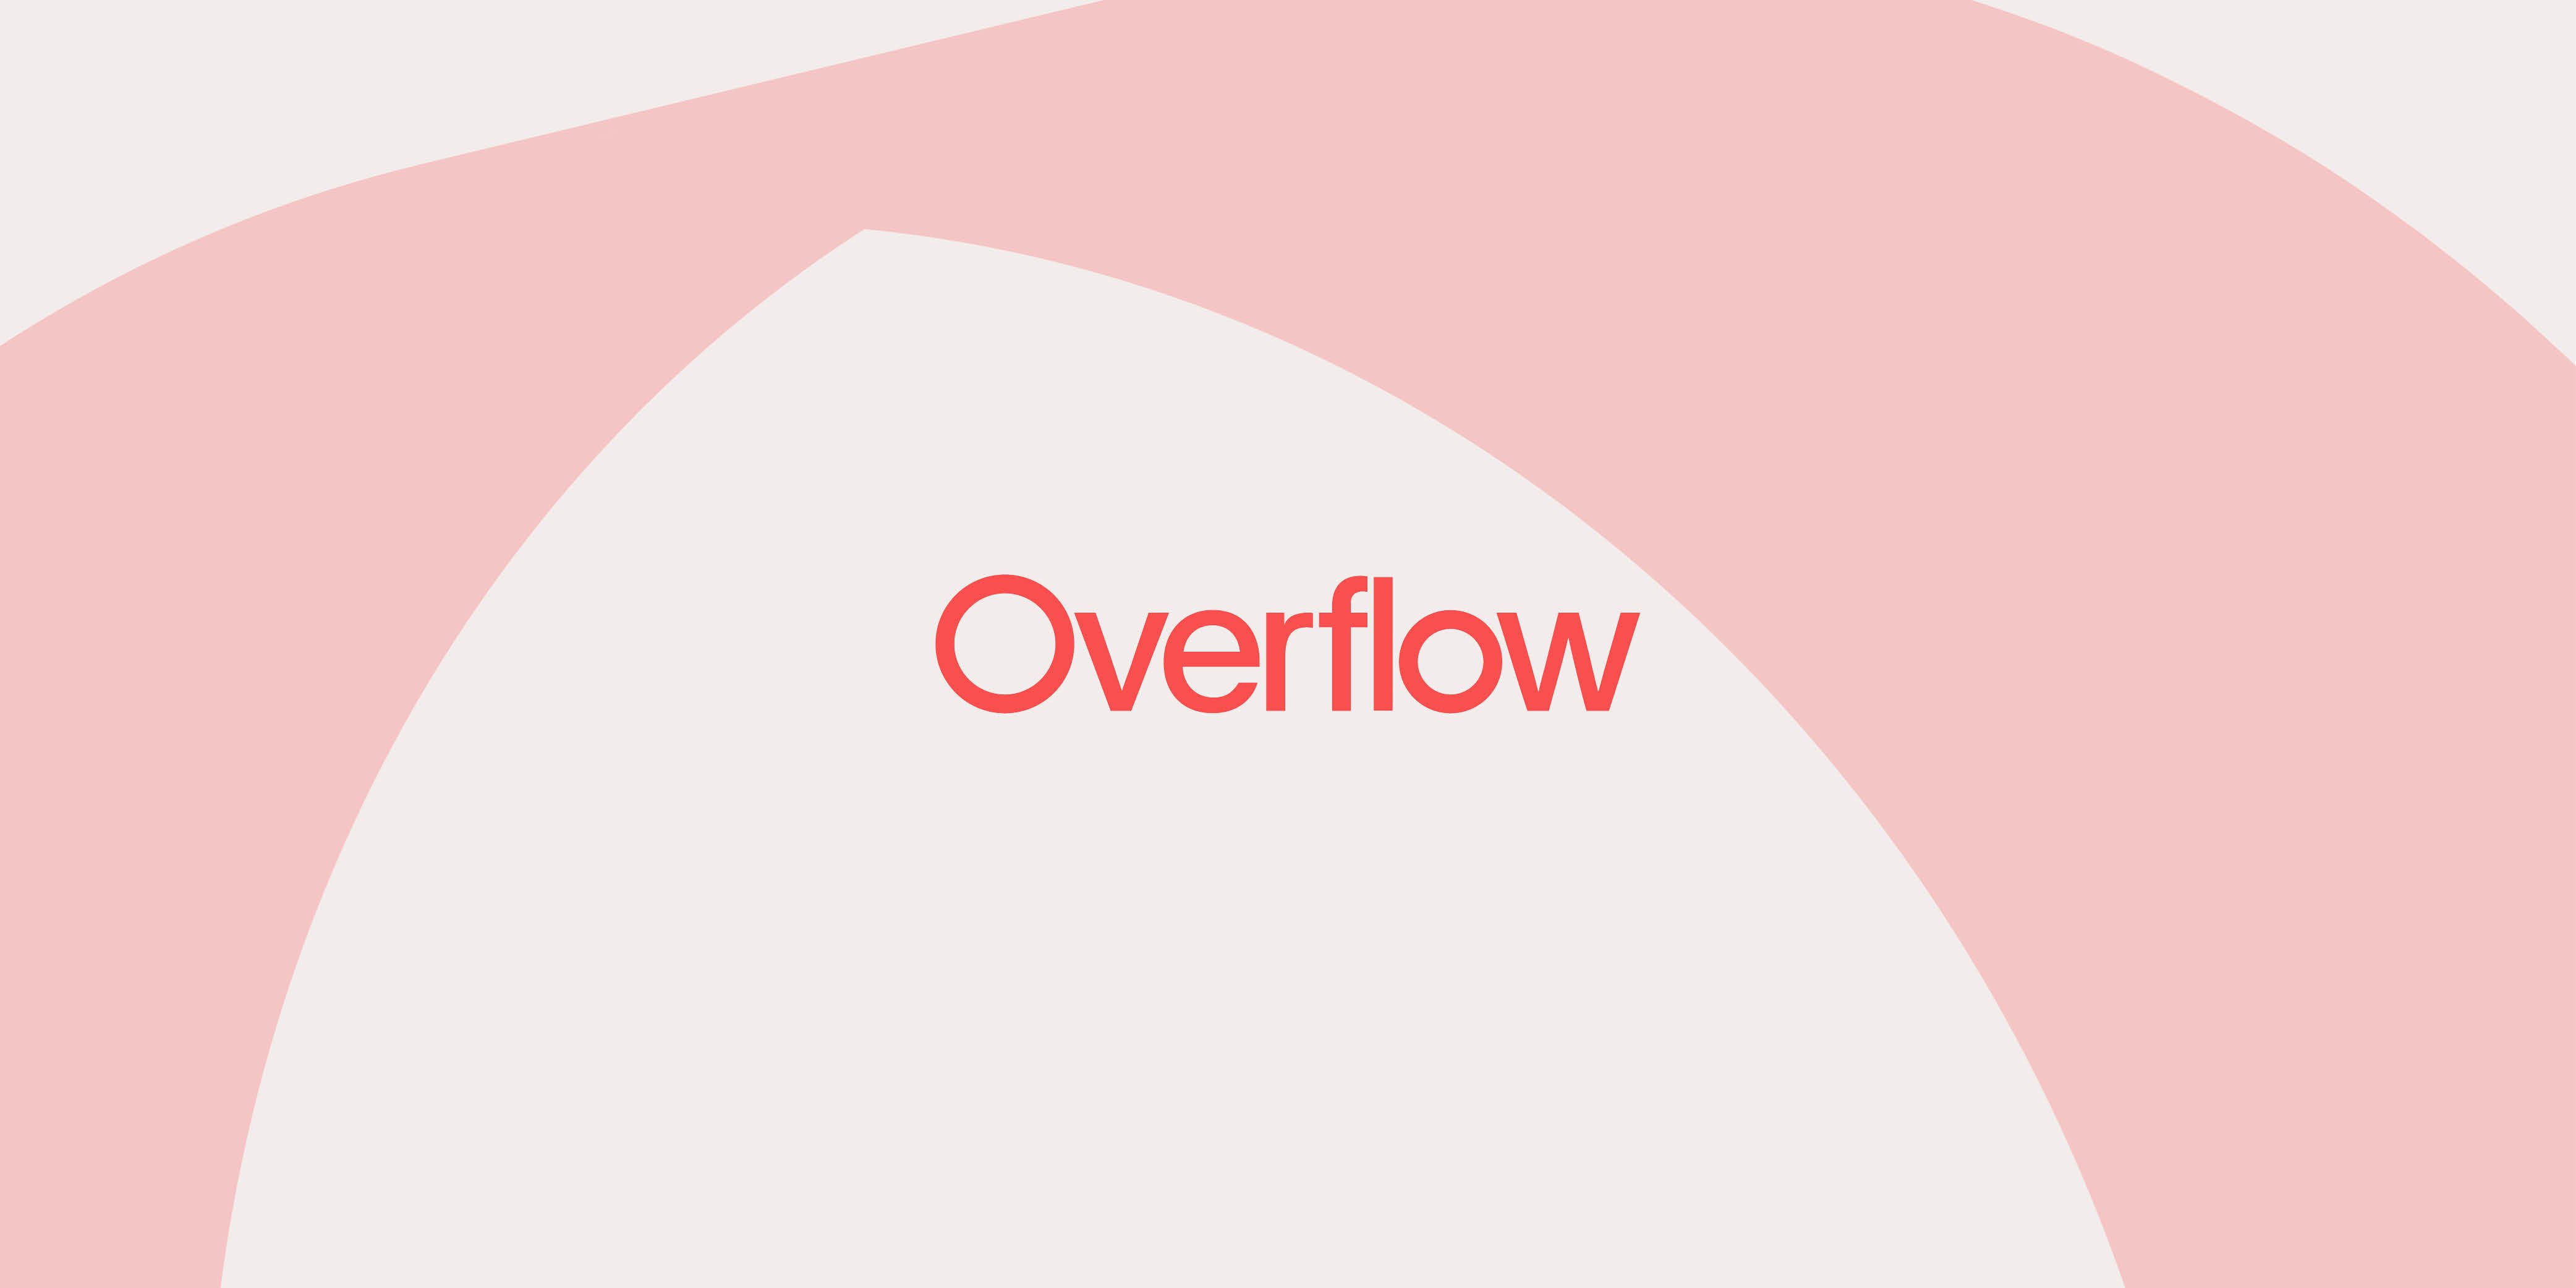 (c) Overflow.co